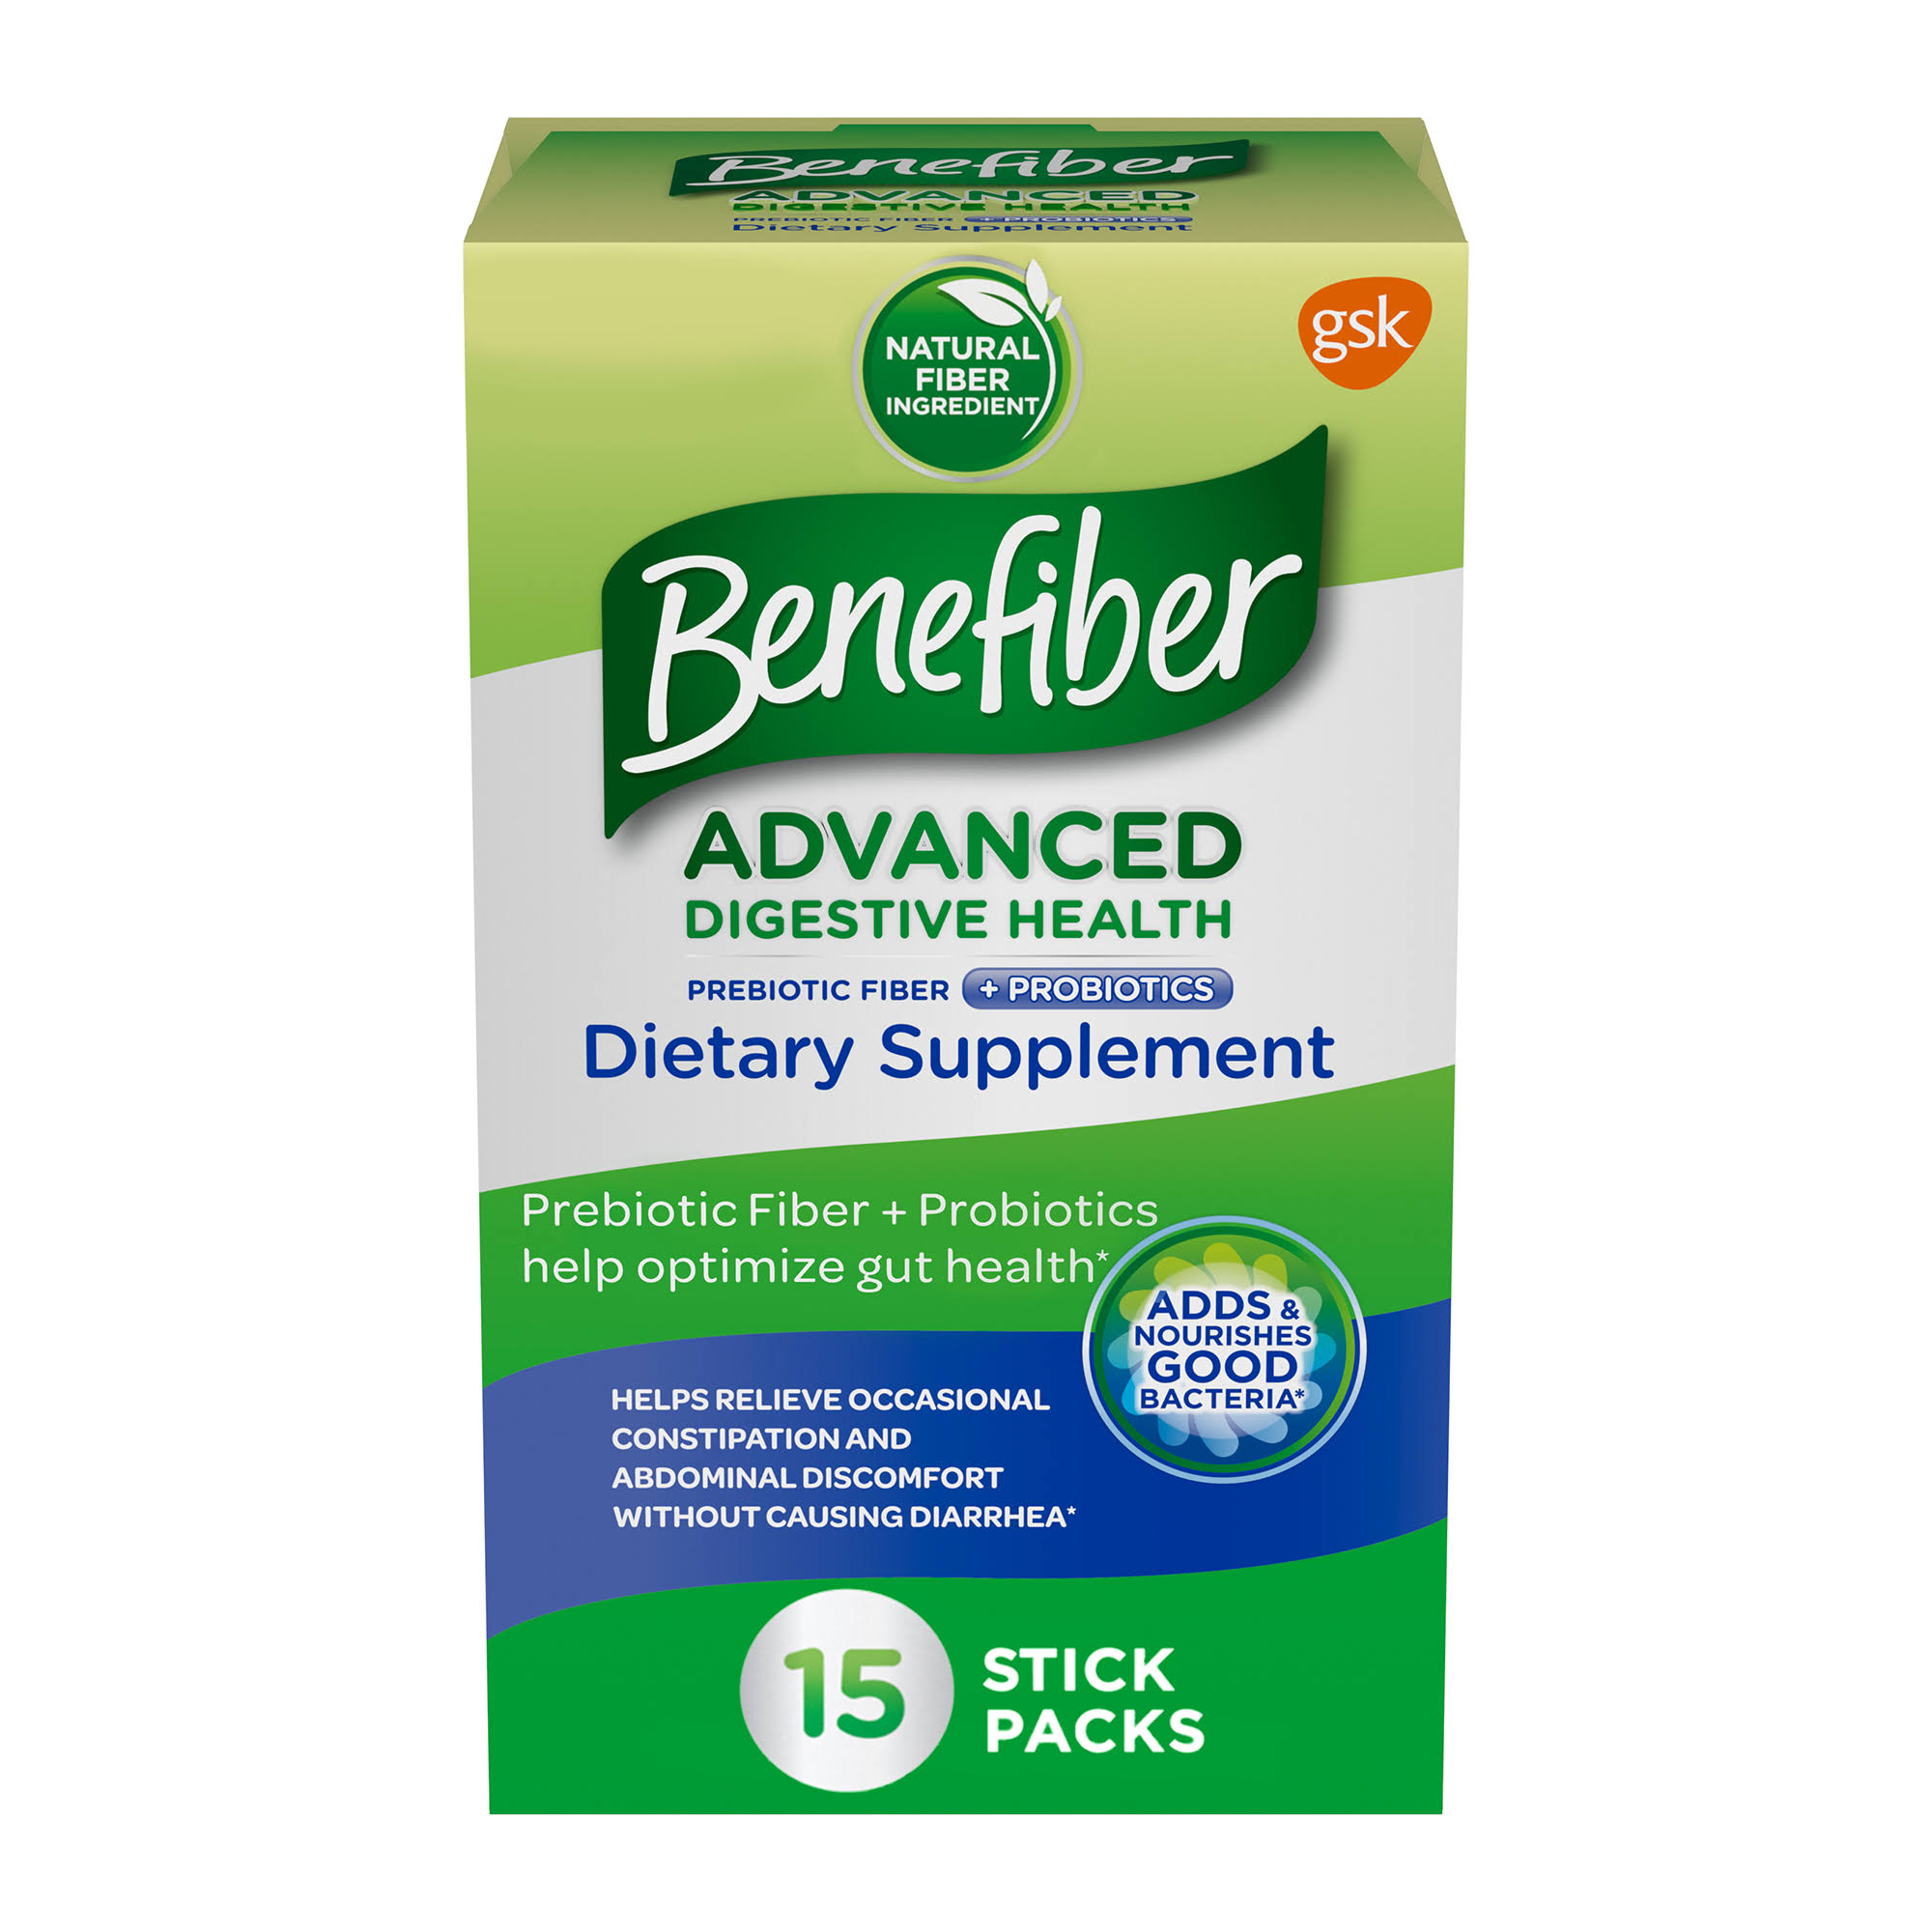 Benefiber Advanced Digestive Health Prebiotic Fiber Supplement Powder